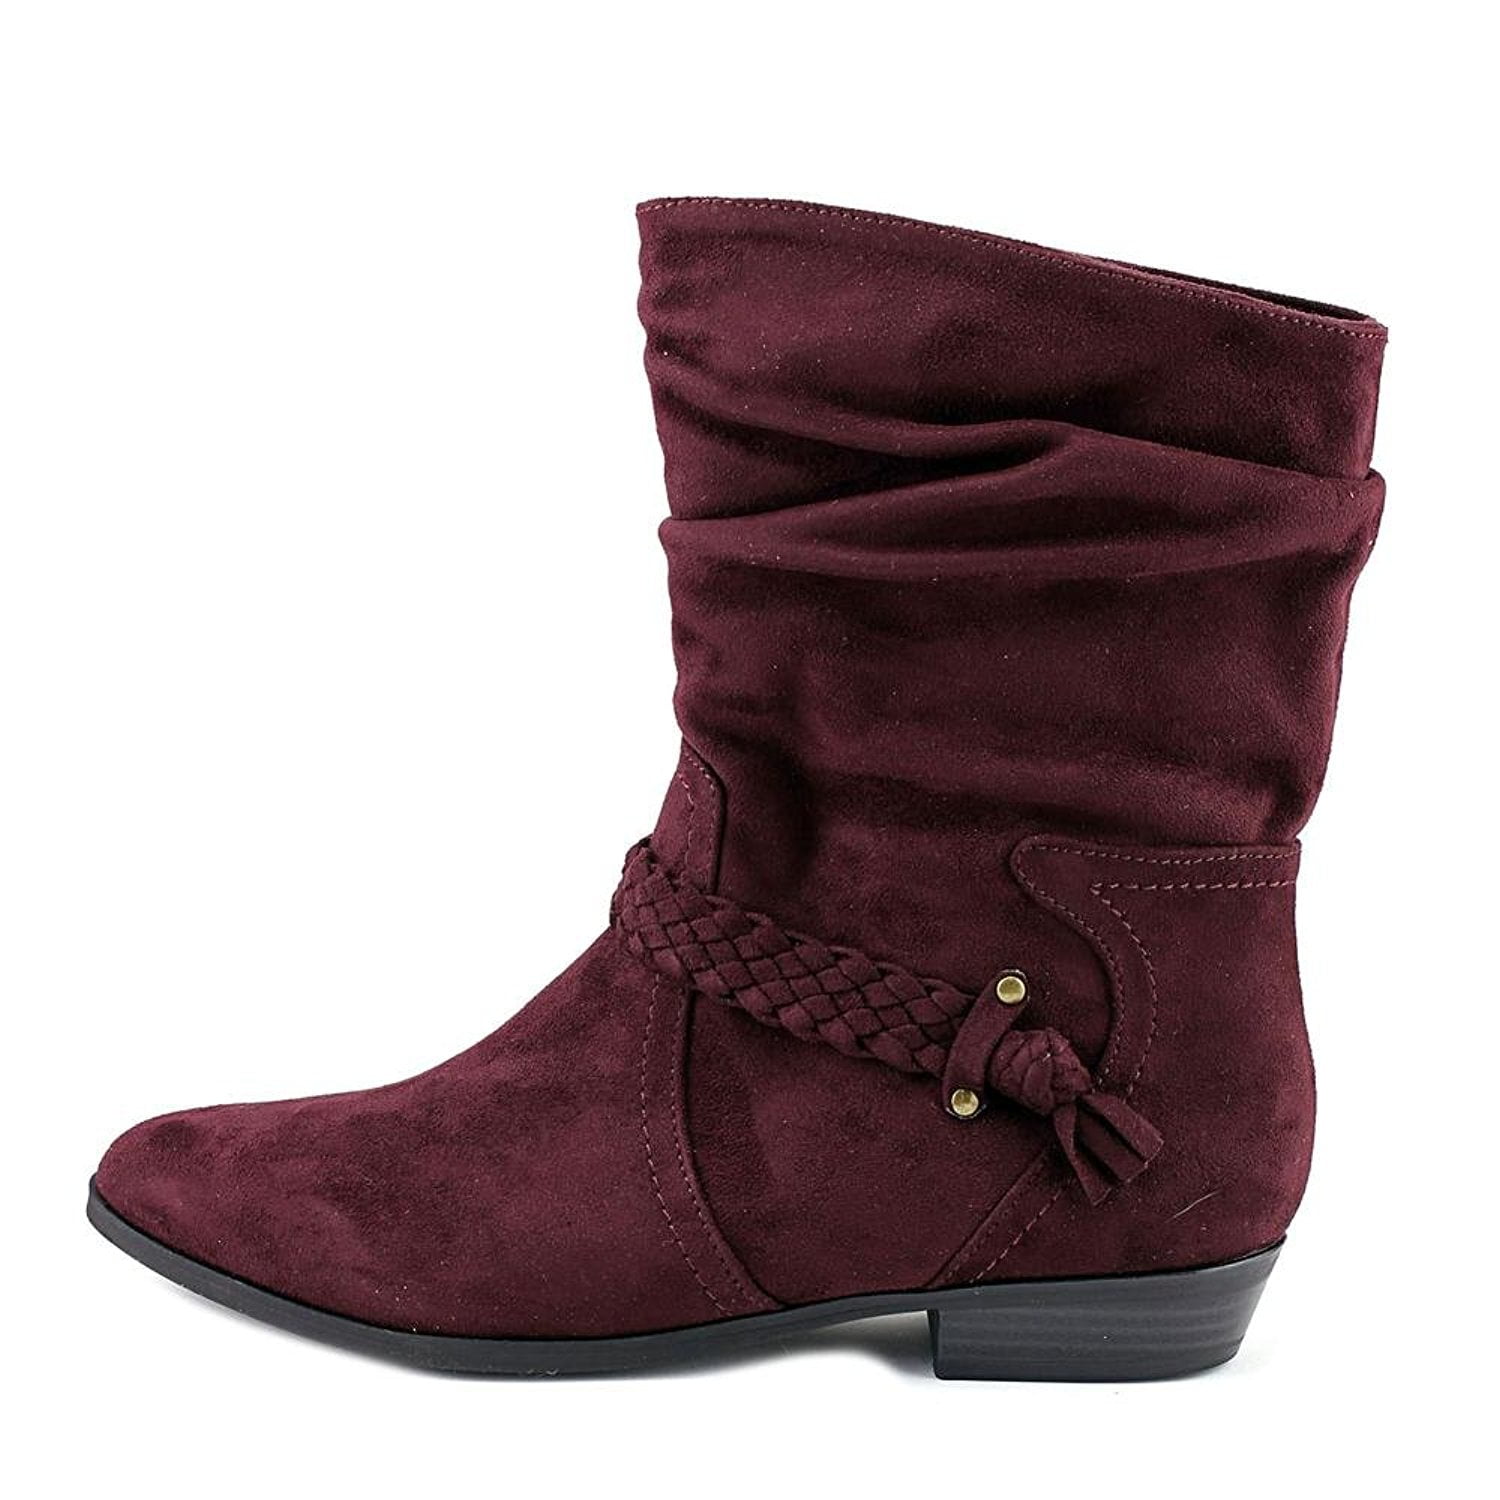 Indigo Rd. Womens Jalena Pointed Toe Ankle Fashion Boots - Walmart.com